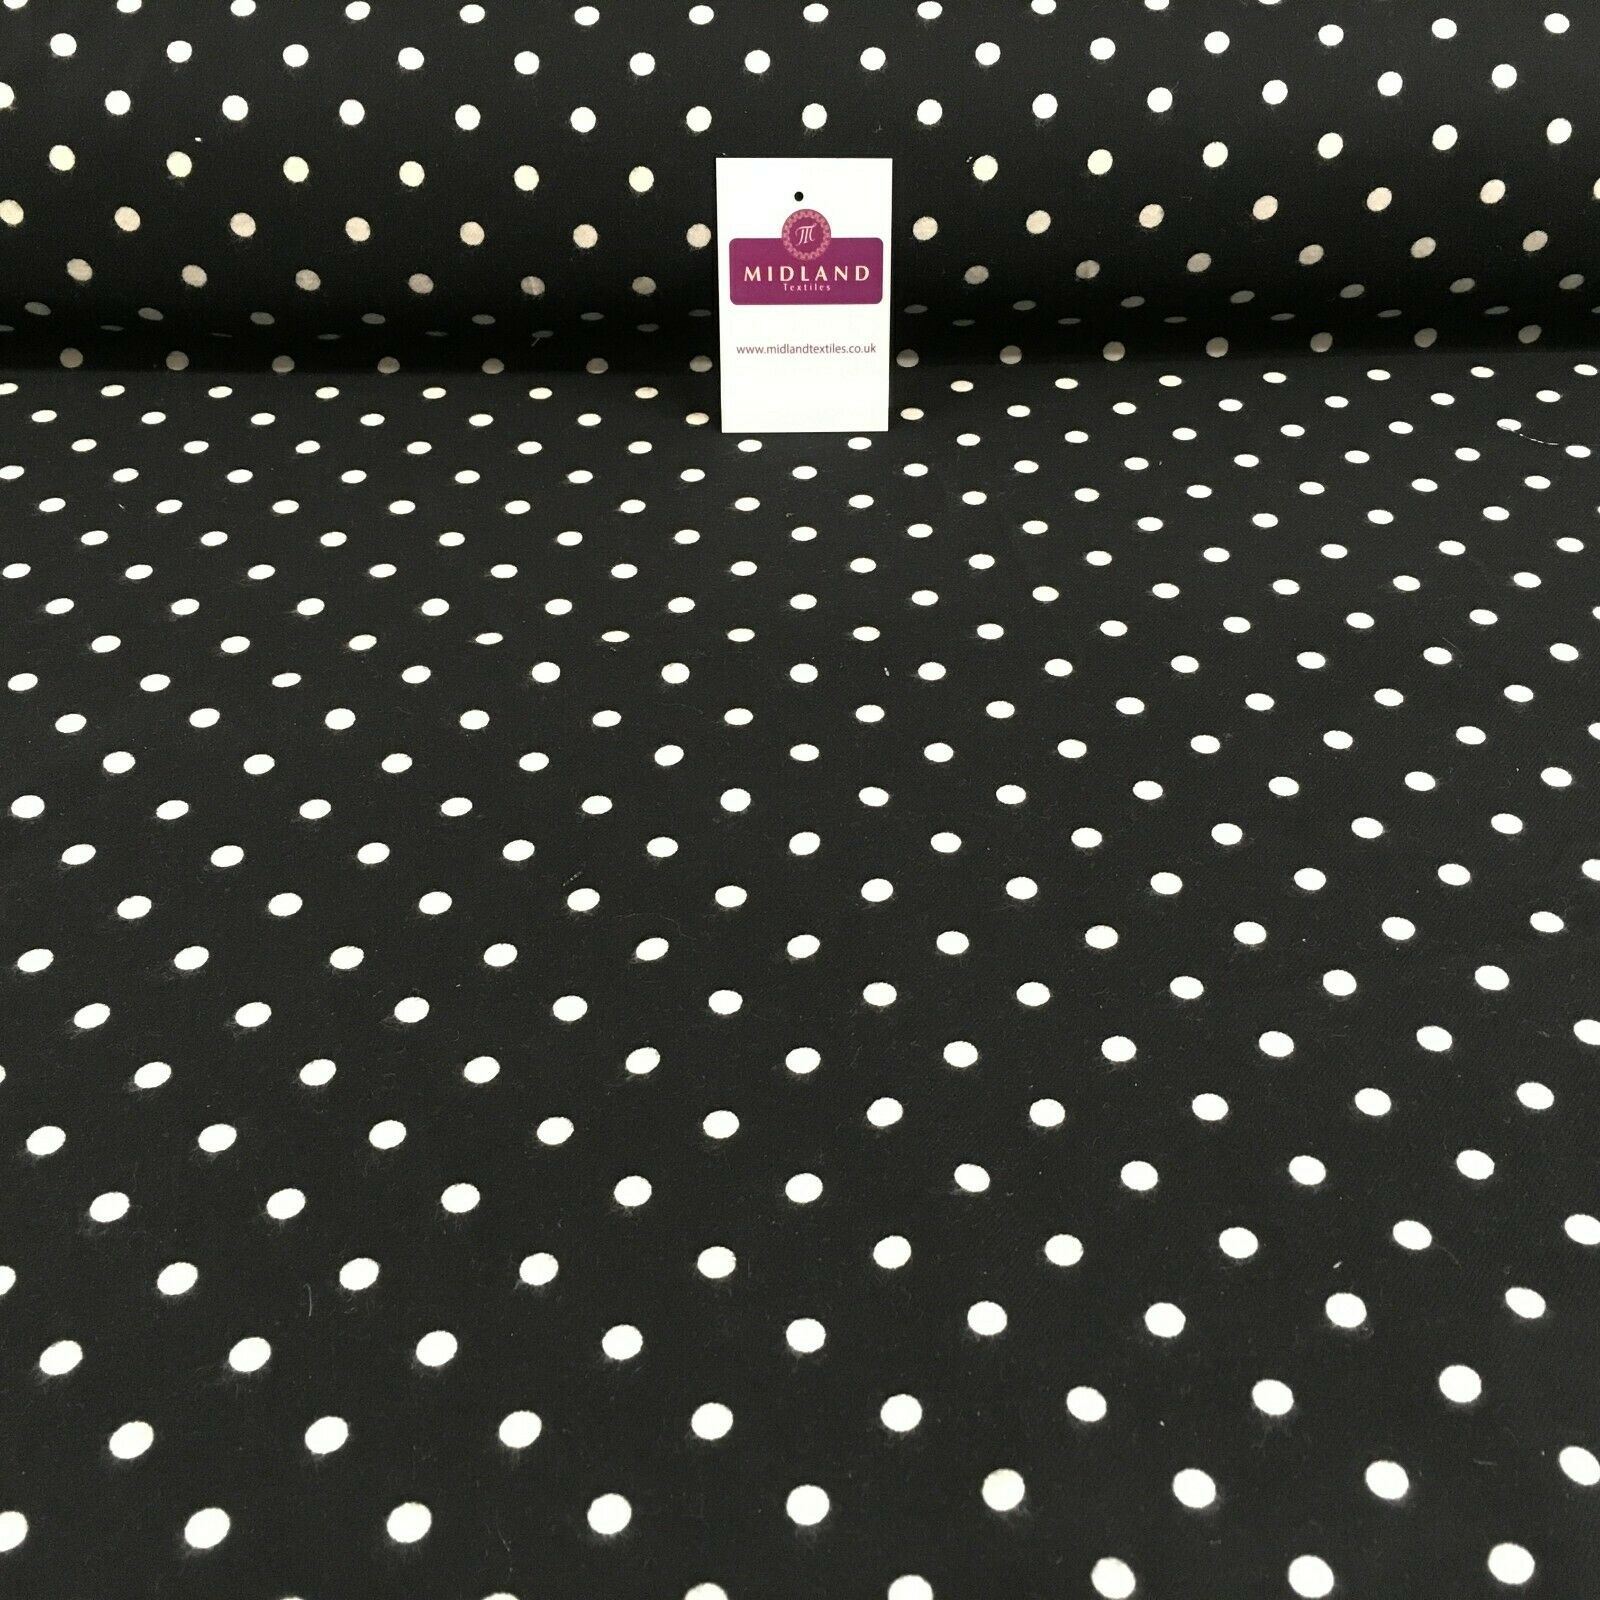 Black Cream Spot Cotton Wynciette Soft Brushed Flannel Fabric 144 cm MK988-25